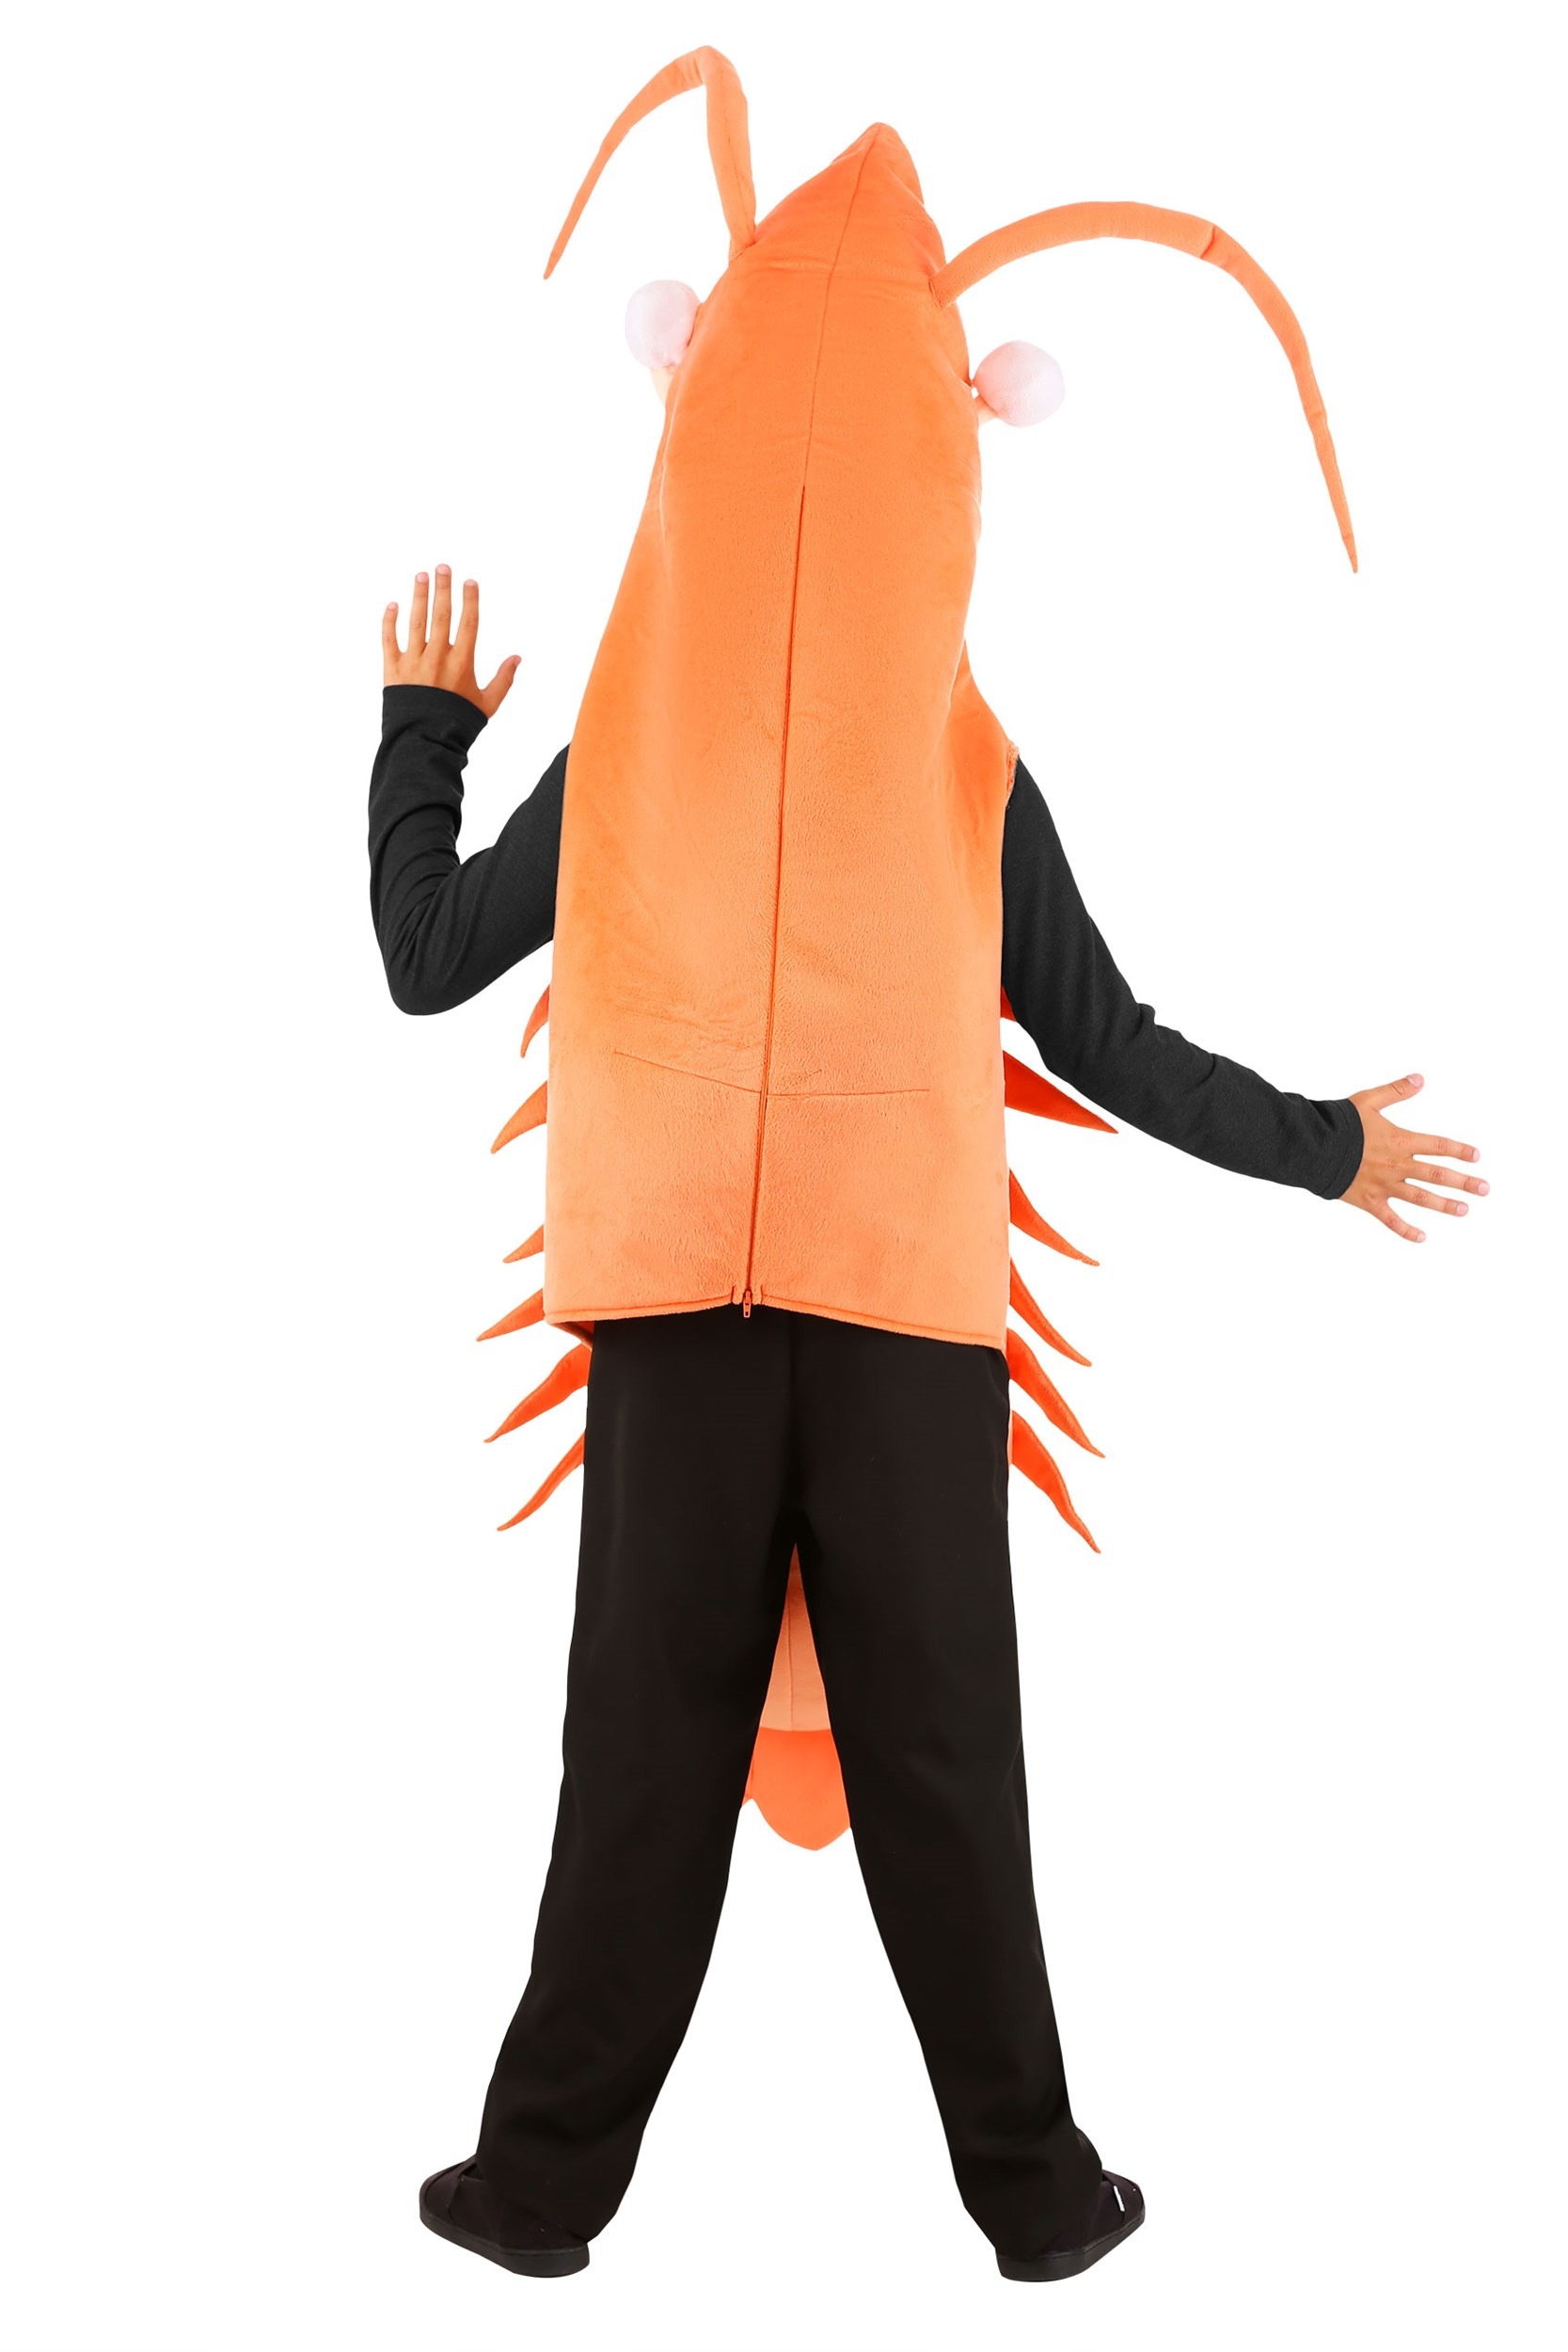 Shrimp Kid's Costume